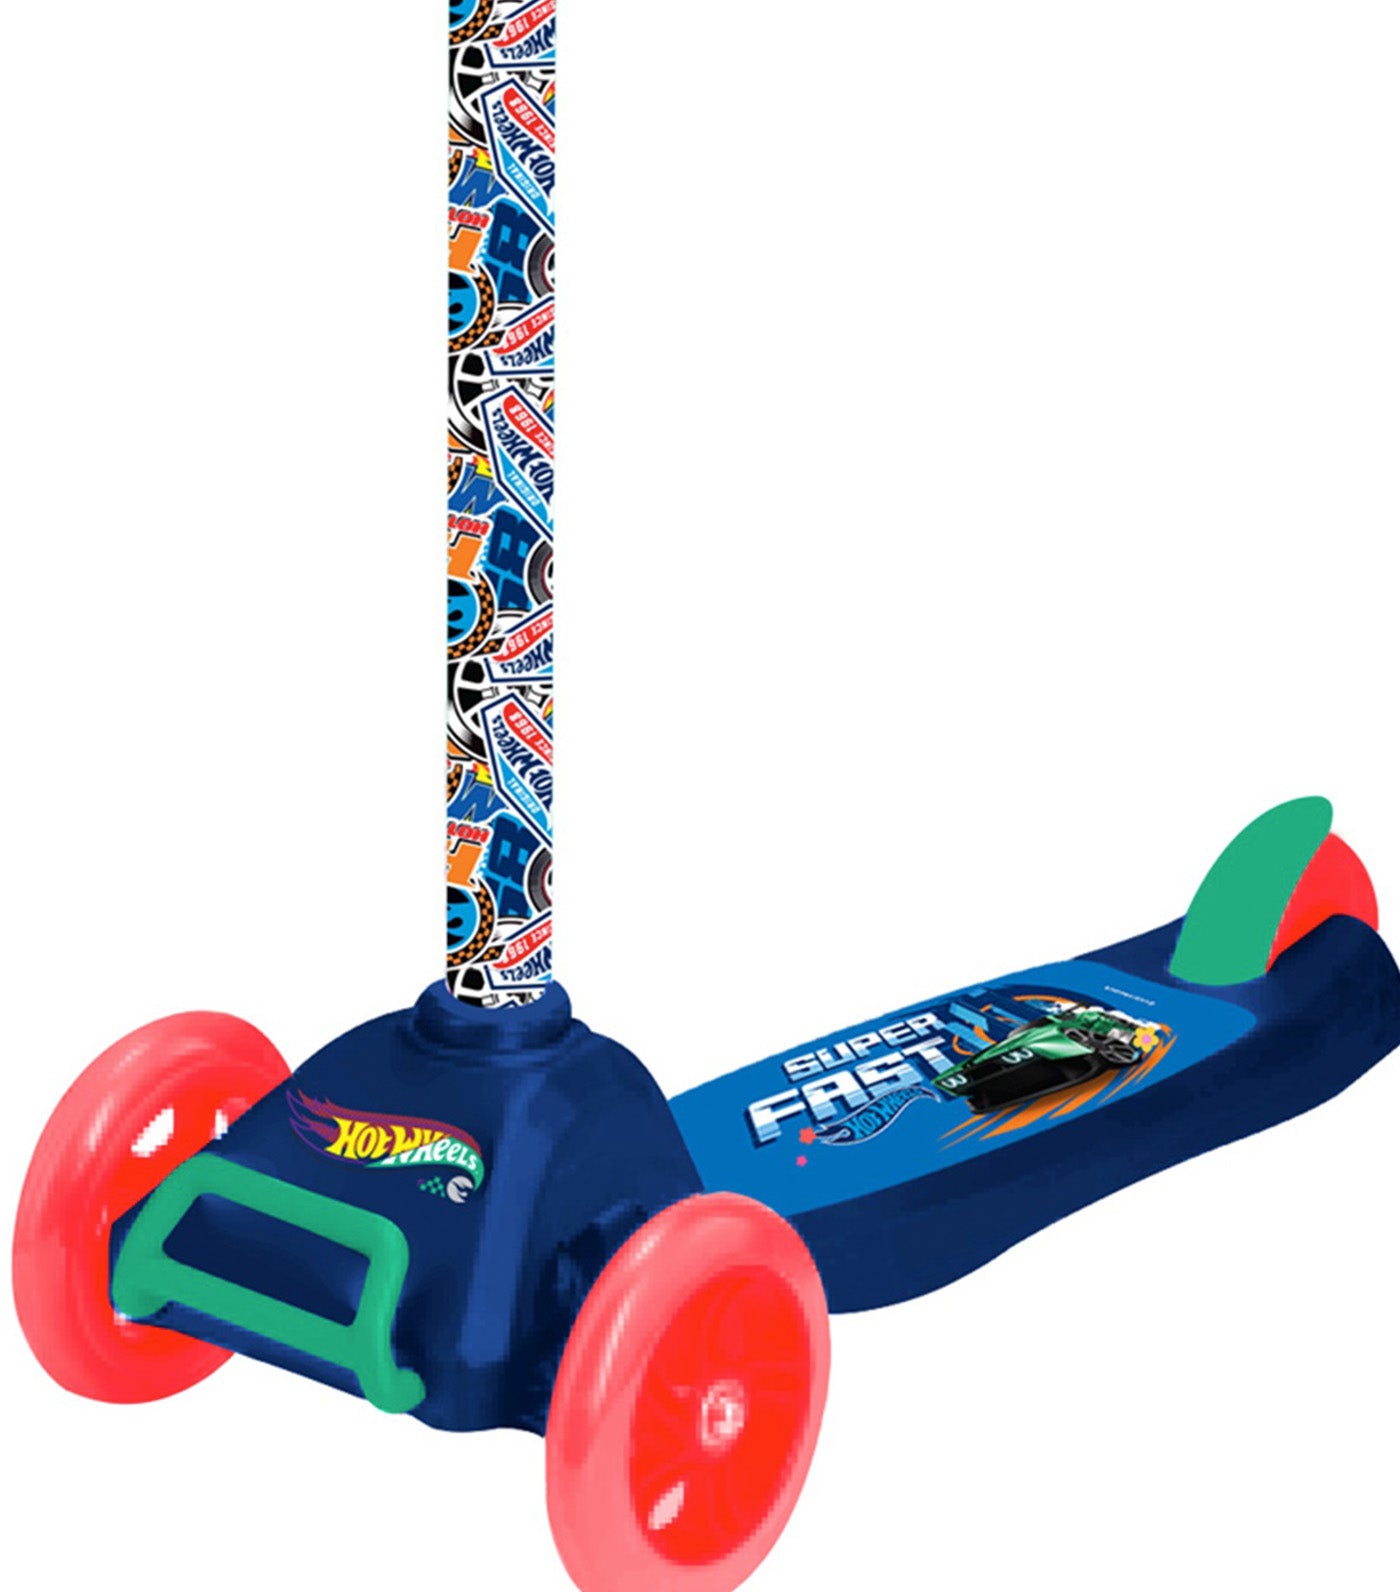 Adjustable Twist Scooter - Blue